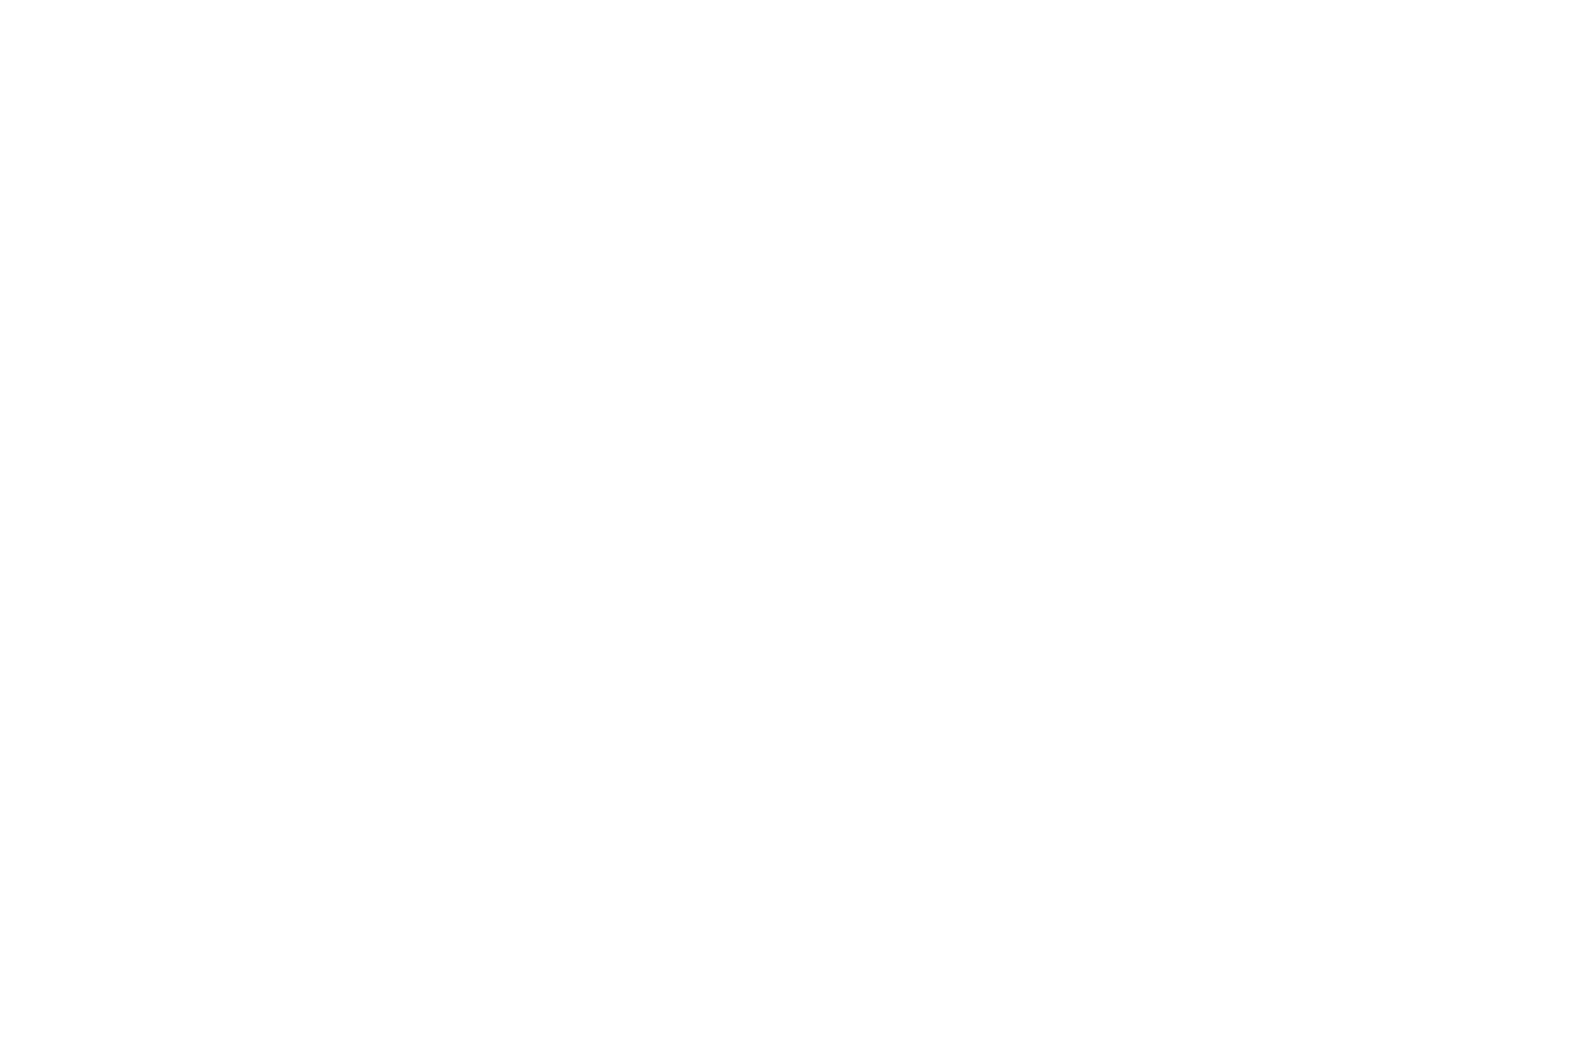 Carrefour logo for dark backgrounds (transparent PNG)